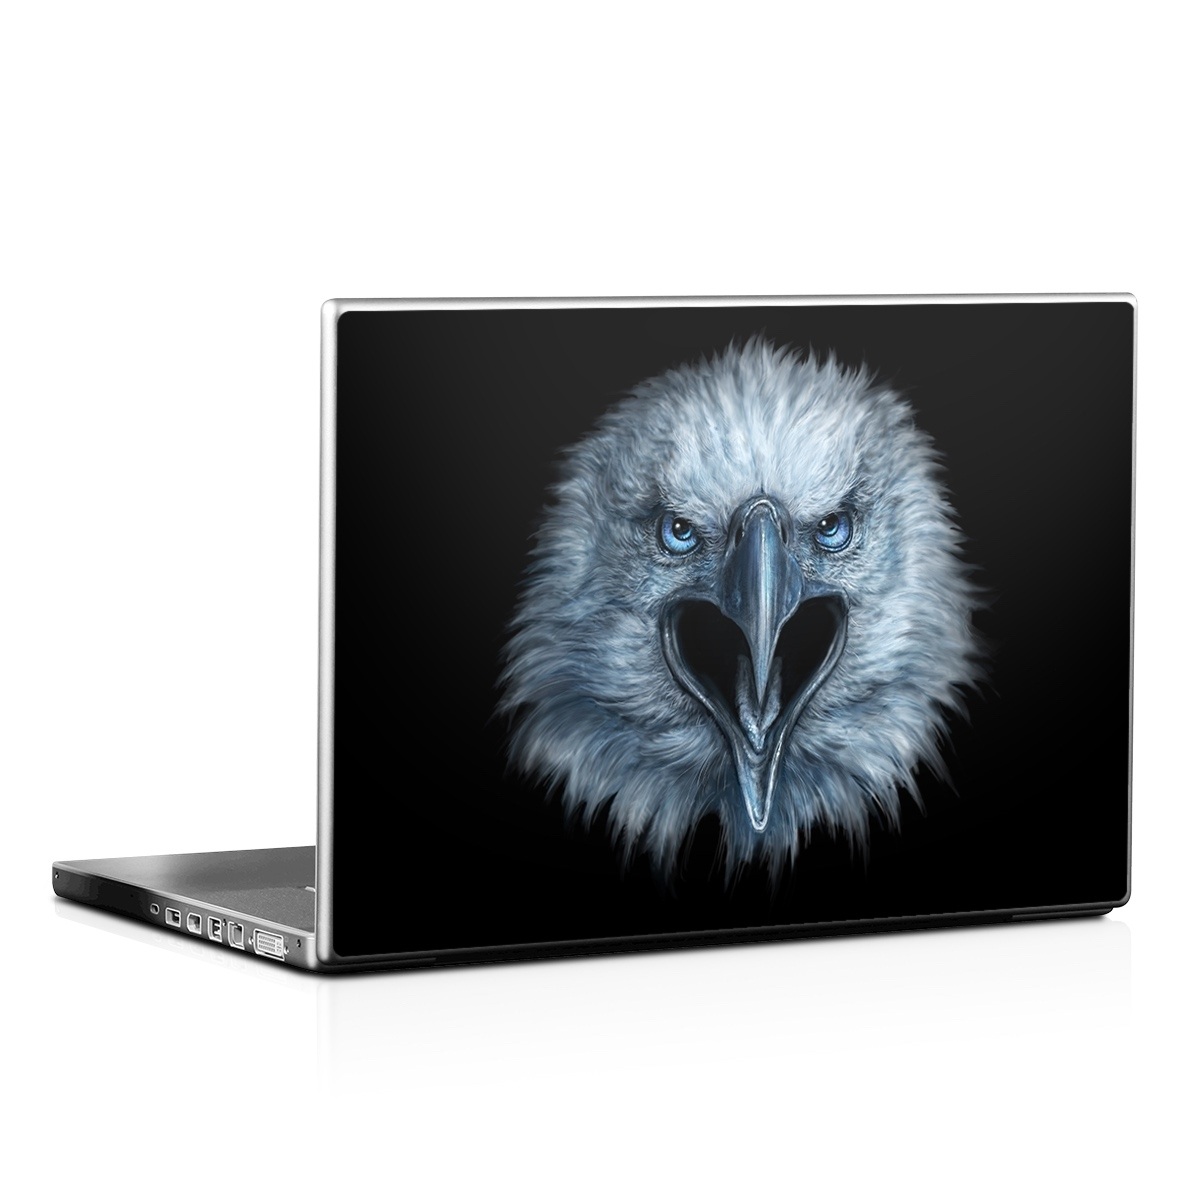 Laptop Skin - Eagle Face (Image 1)